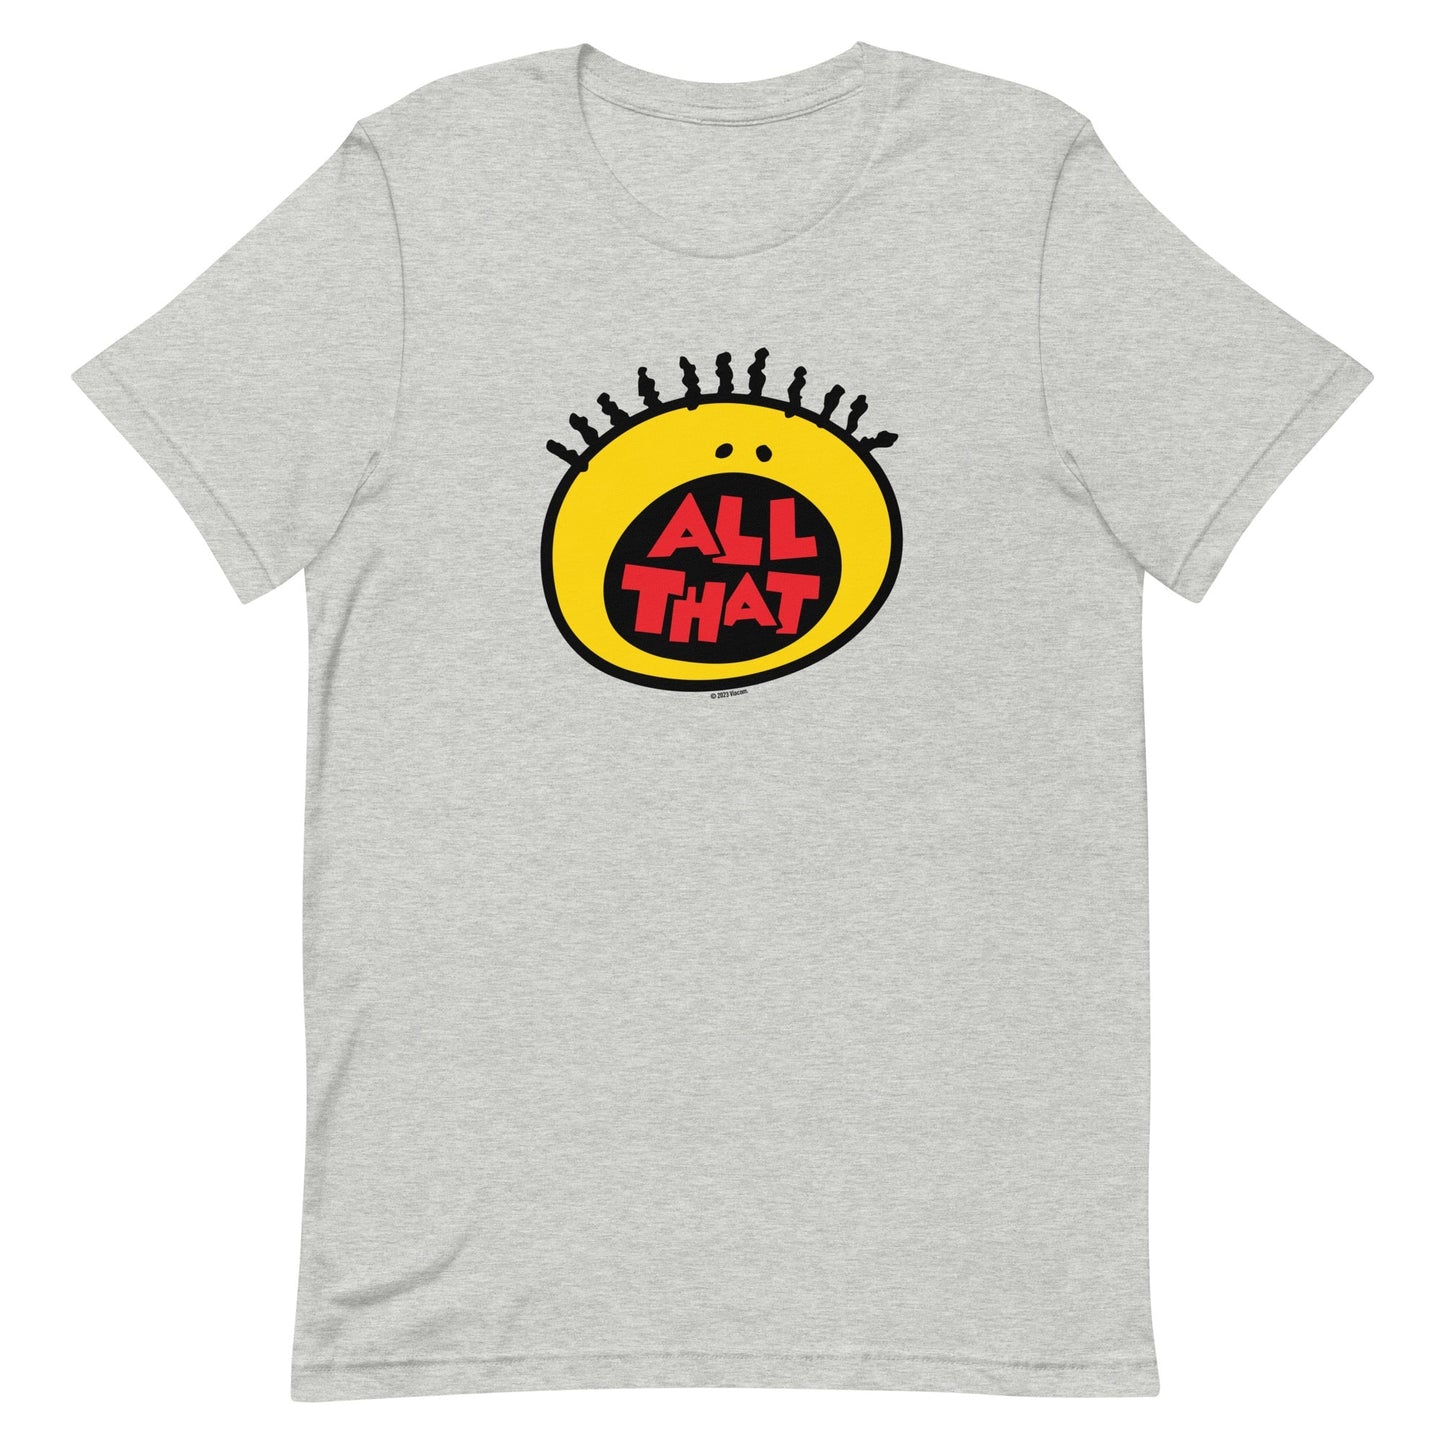 All That Original Logo Adult Short Sleeve T - Shirt - Paramount Shop